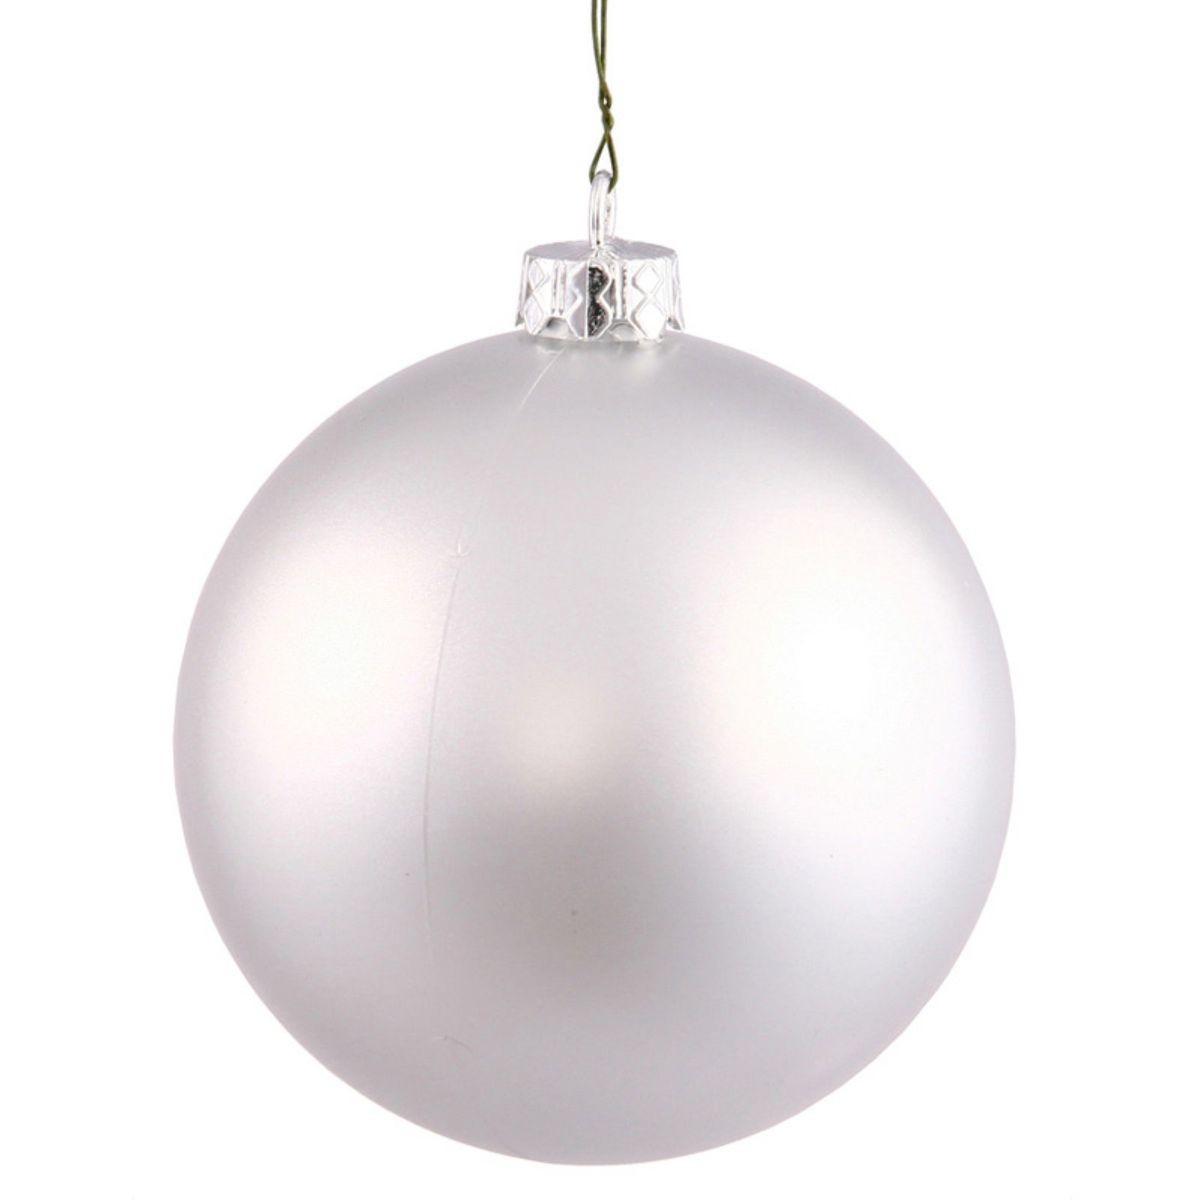 [RDY] [送料無料] Vickerman 2.75インチ クリスマスオーナメントボール、シルバーマット仕上げ、飛散防止プラスチック、紫外線耐性、ホリデークリスマスツリーの装飾、12パック [楽天海外通販]